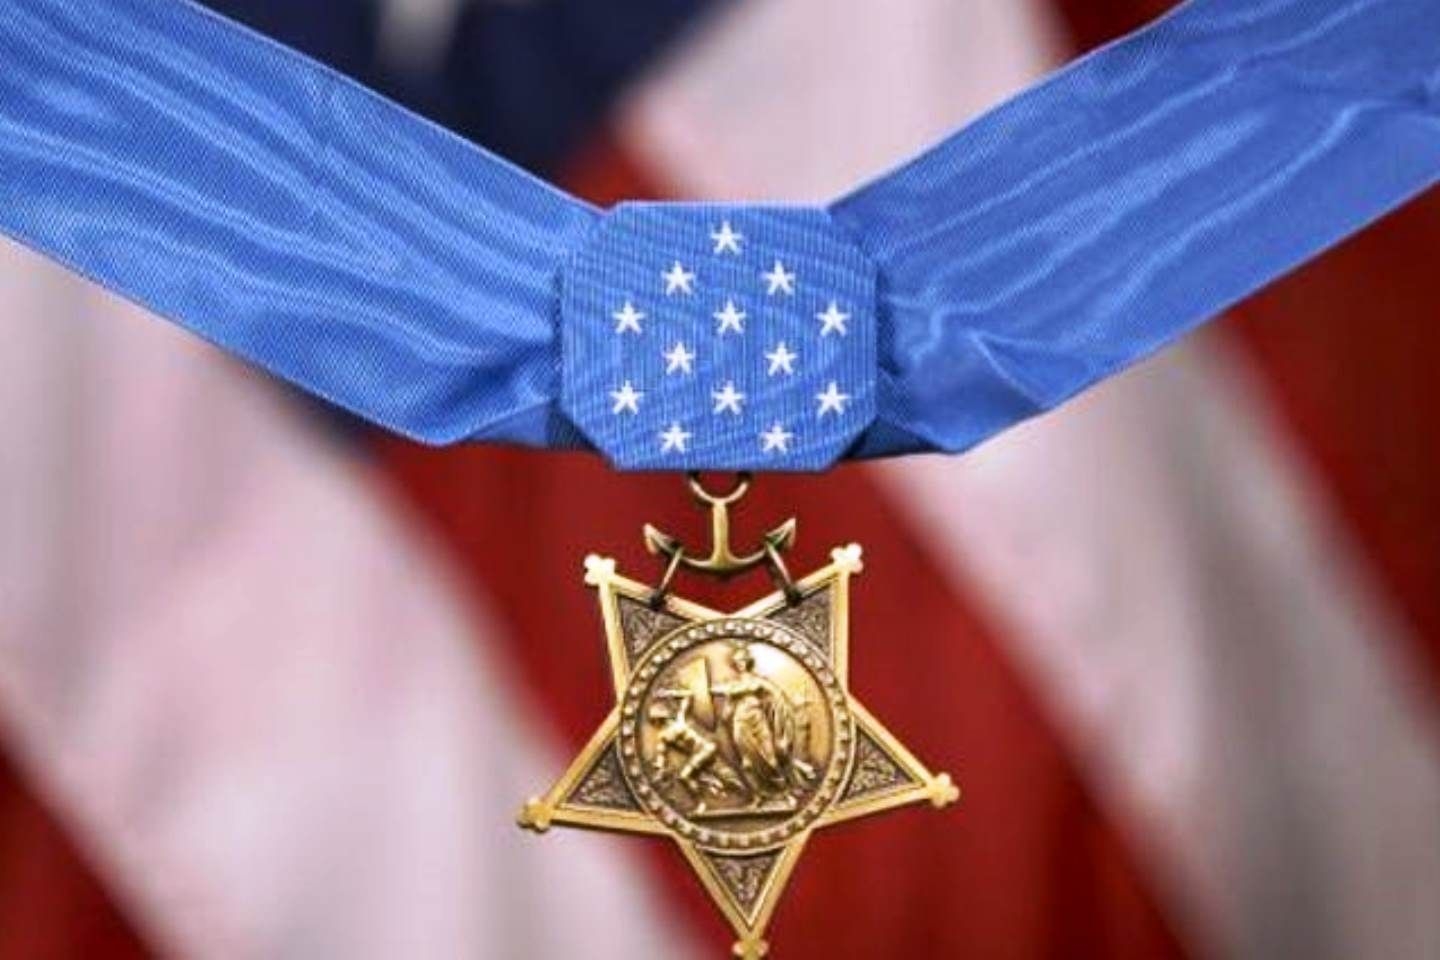 https://veterans.utah.gov/honoring-utahs-medal-of-honor-recipients/